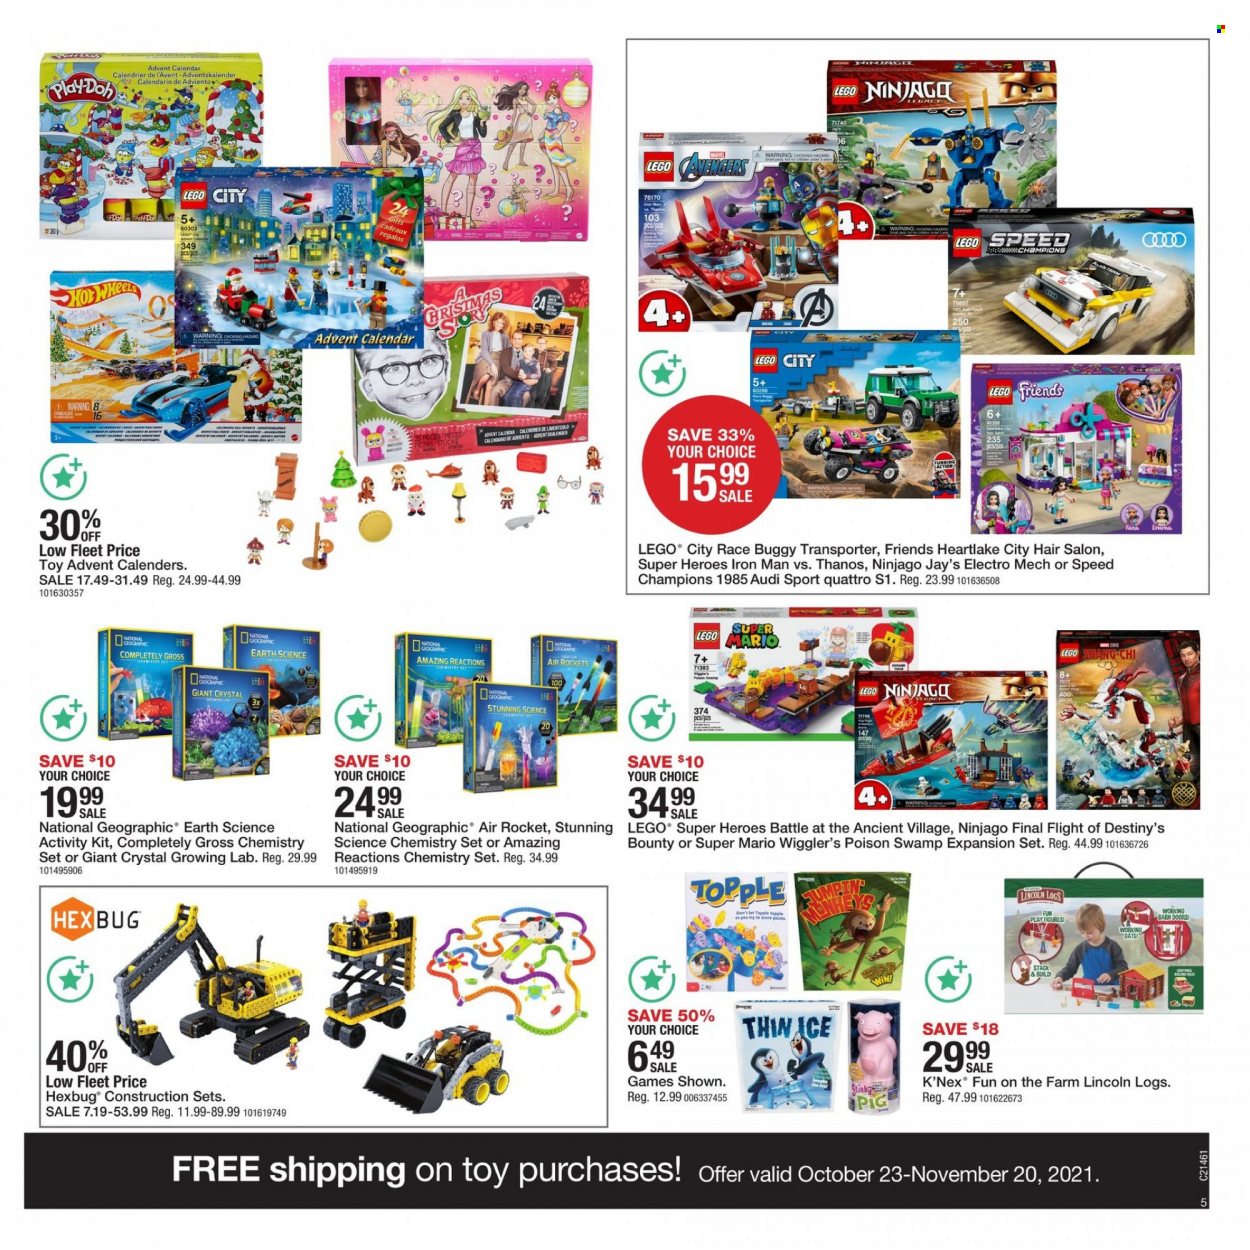 thumbnail - Fleet Farm Flyer - 11/12/2021 - 11/20/2021 - Sales products - Bounty, advent calendar, Avengers, calendar, Ninjago, K'NEX, LEGO, LEGO City, LEGO Friends, LEGO Ninjago, Lincoln Logs, rocket, toys, Super Heroes, LEGO Super Heroes, race buggy transporter, LEGO Super Mario. Page 5.